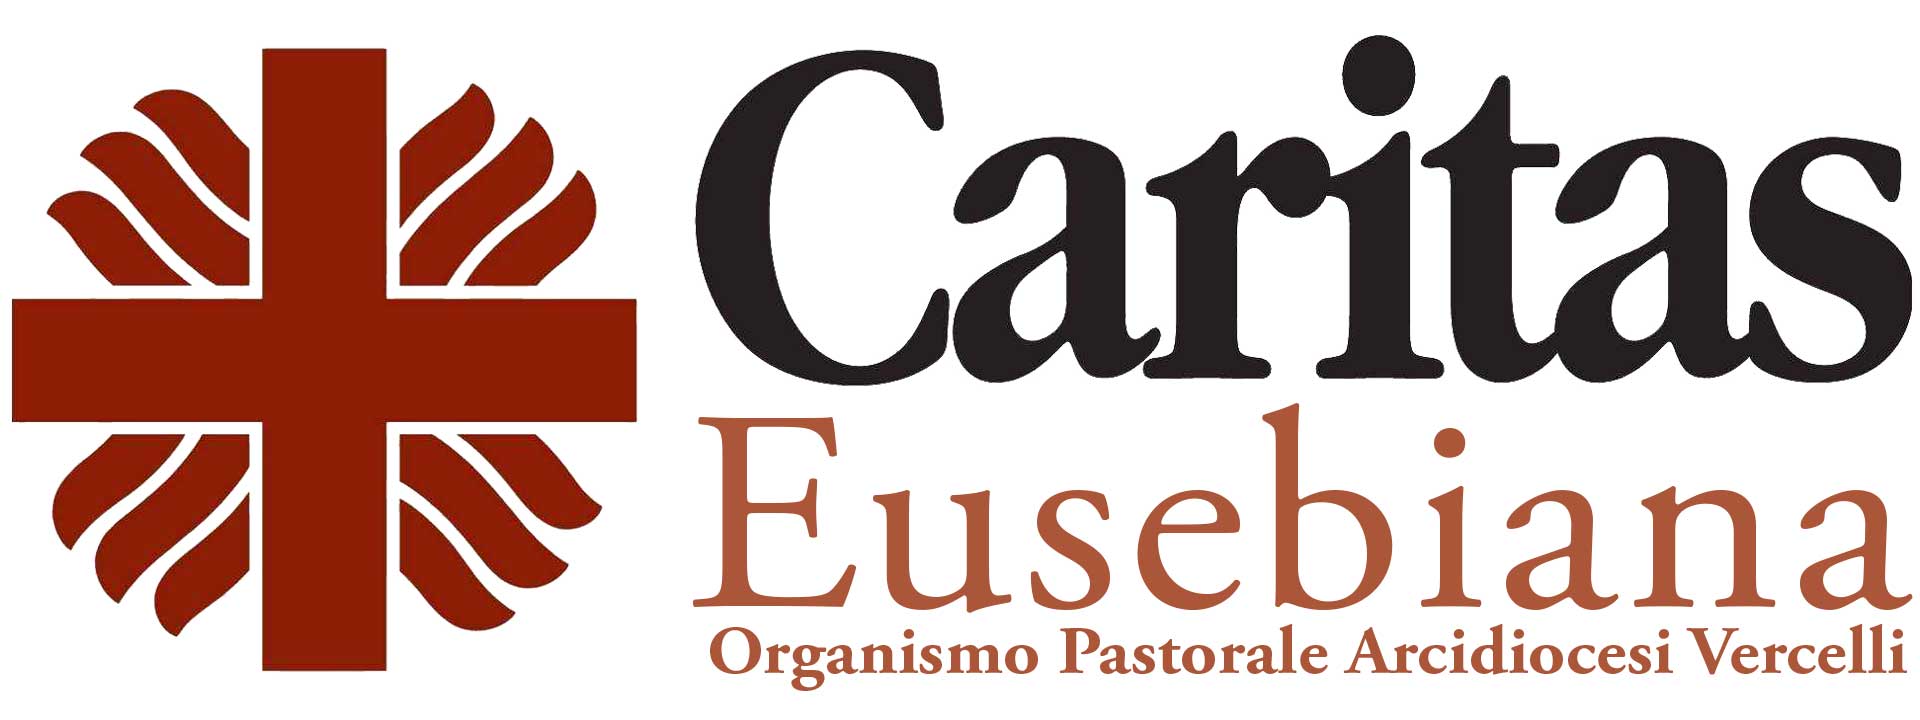 Logo Caritas Eusebiana